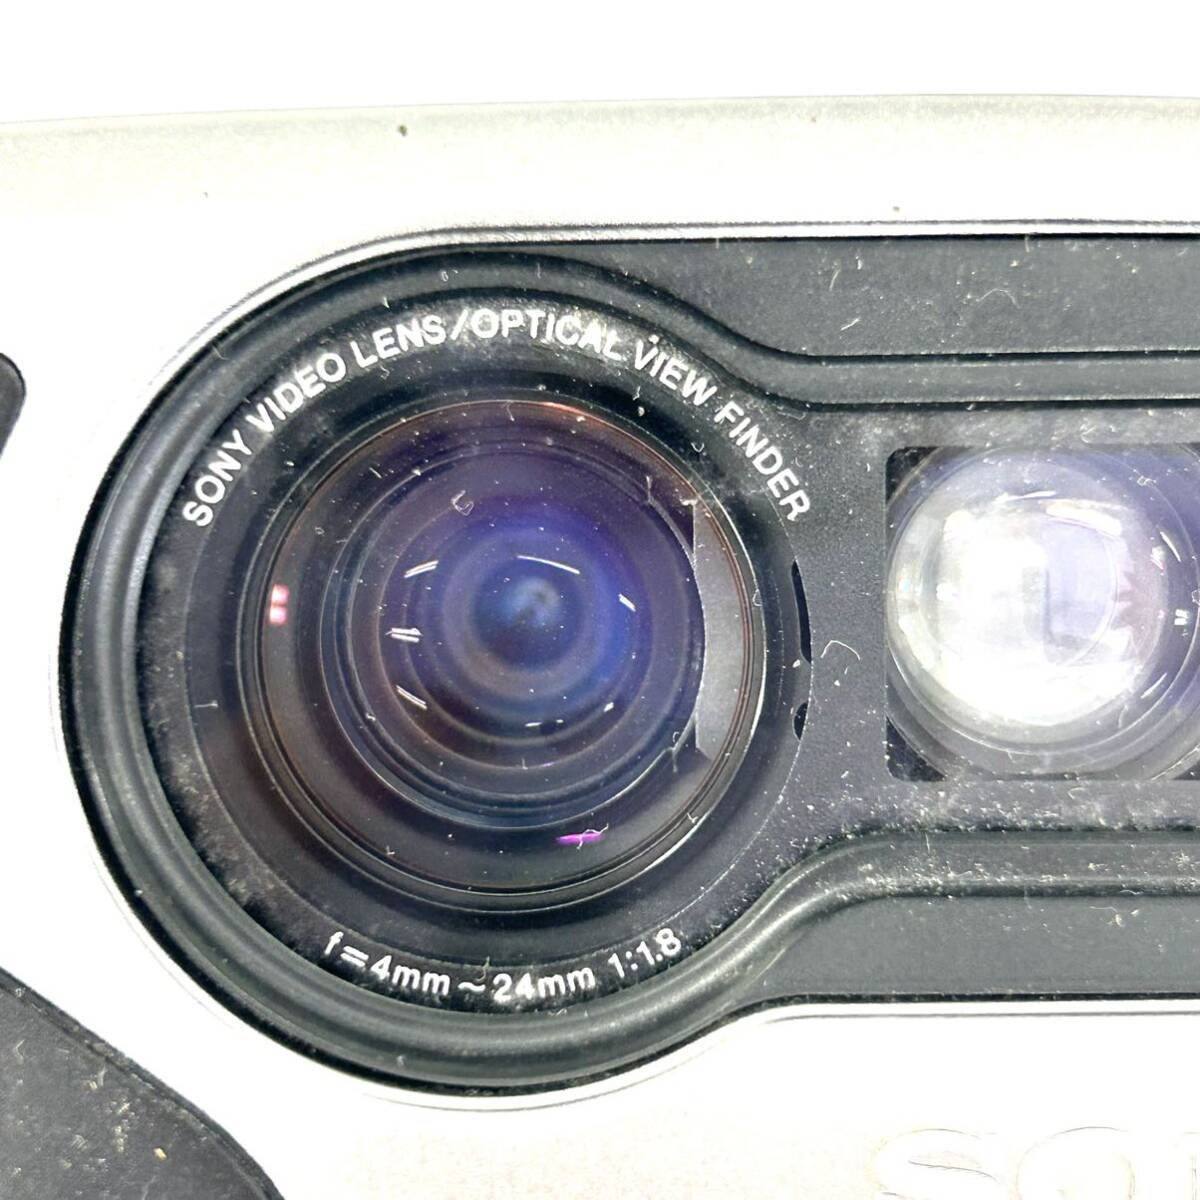 Y603 ハンディカム ビデオカメラ SONY ソニー video8 Handycam SC9 CCD-SC9 29670 f=4mm~24mm 1:1.8 ジャンク品 中古 訳ありの画像10